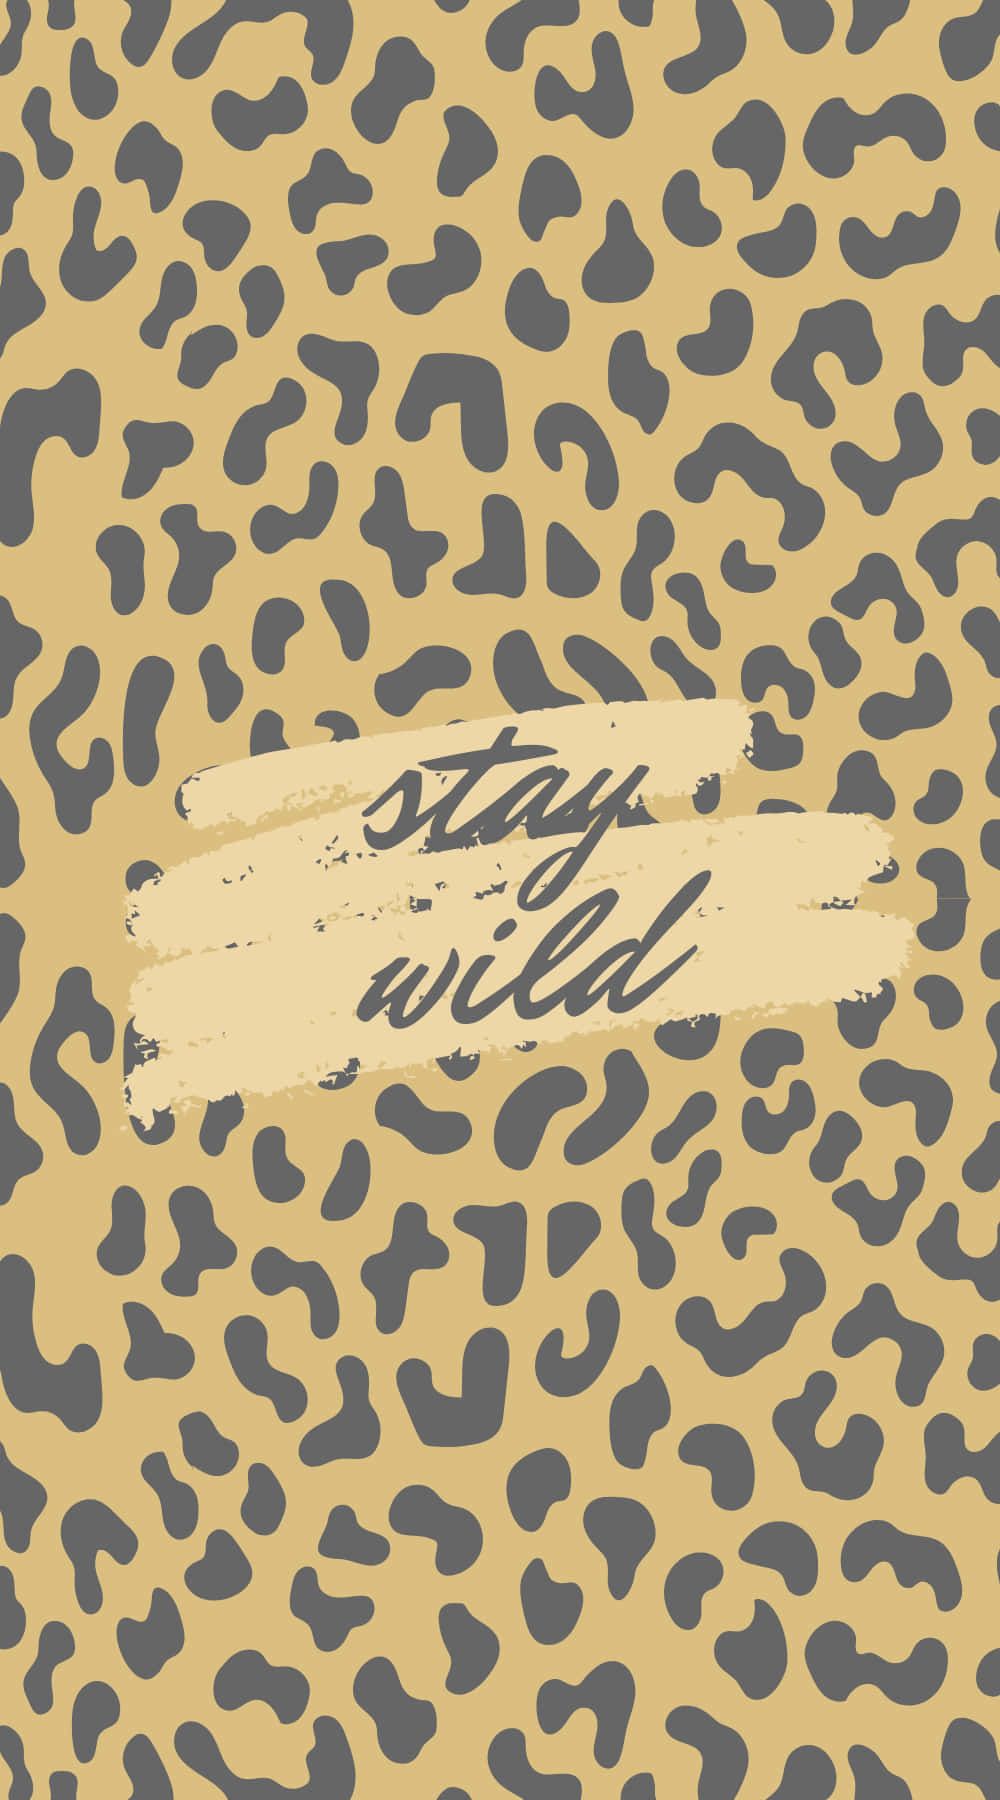 Louis Vuitton Cheetah Sparkle Background  Cheetah wallpaper, Pink wallpaper  backgrounds, Cheetah print wallpaper